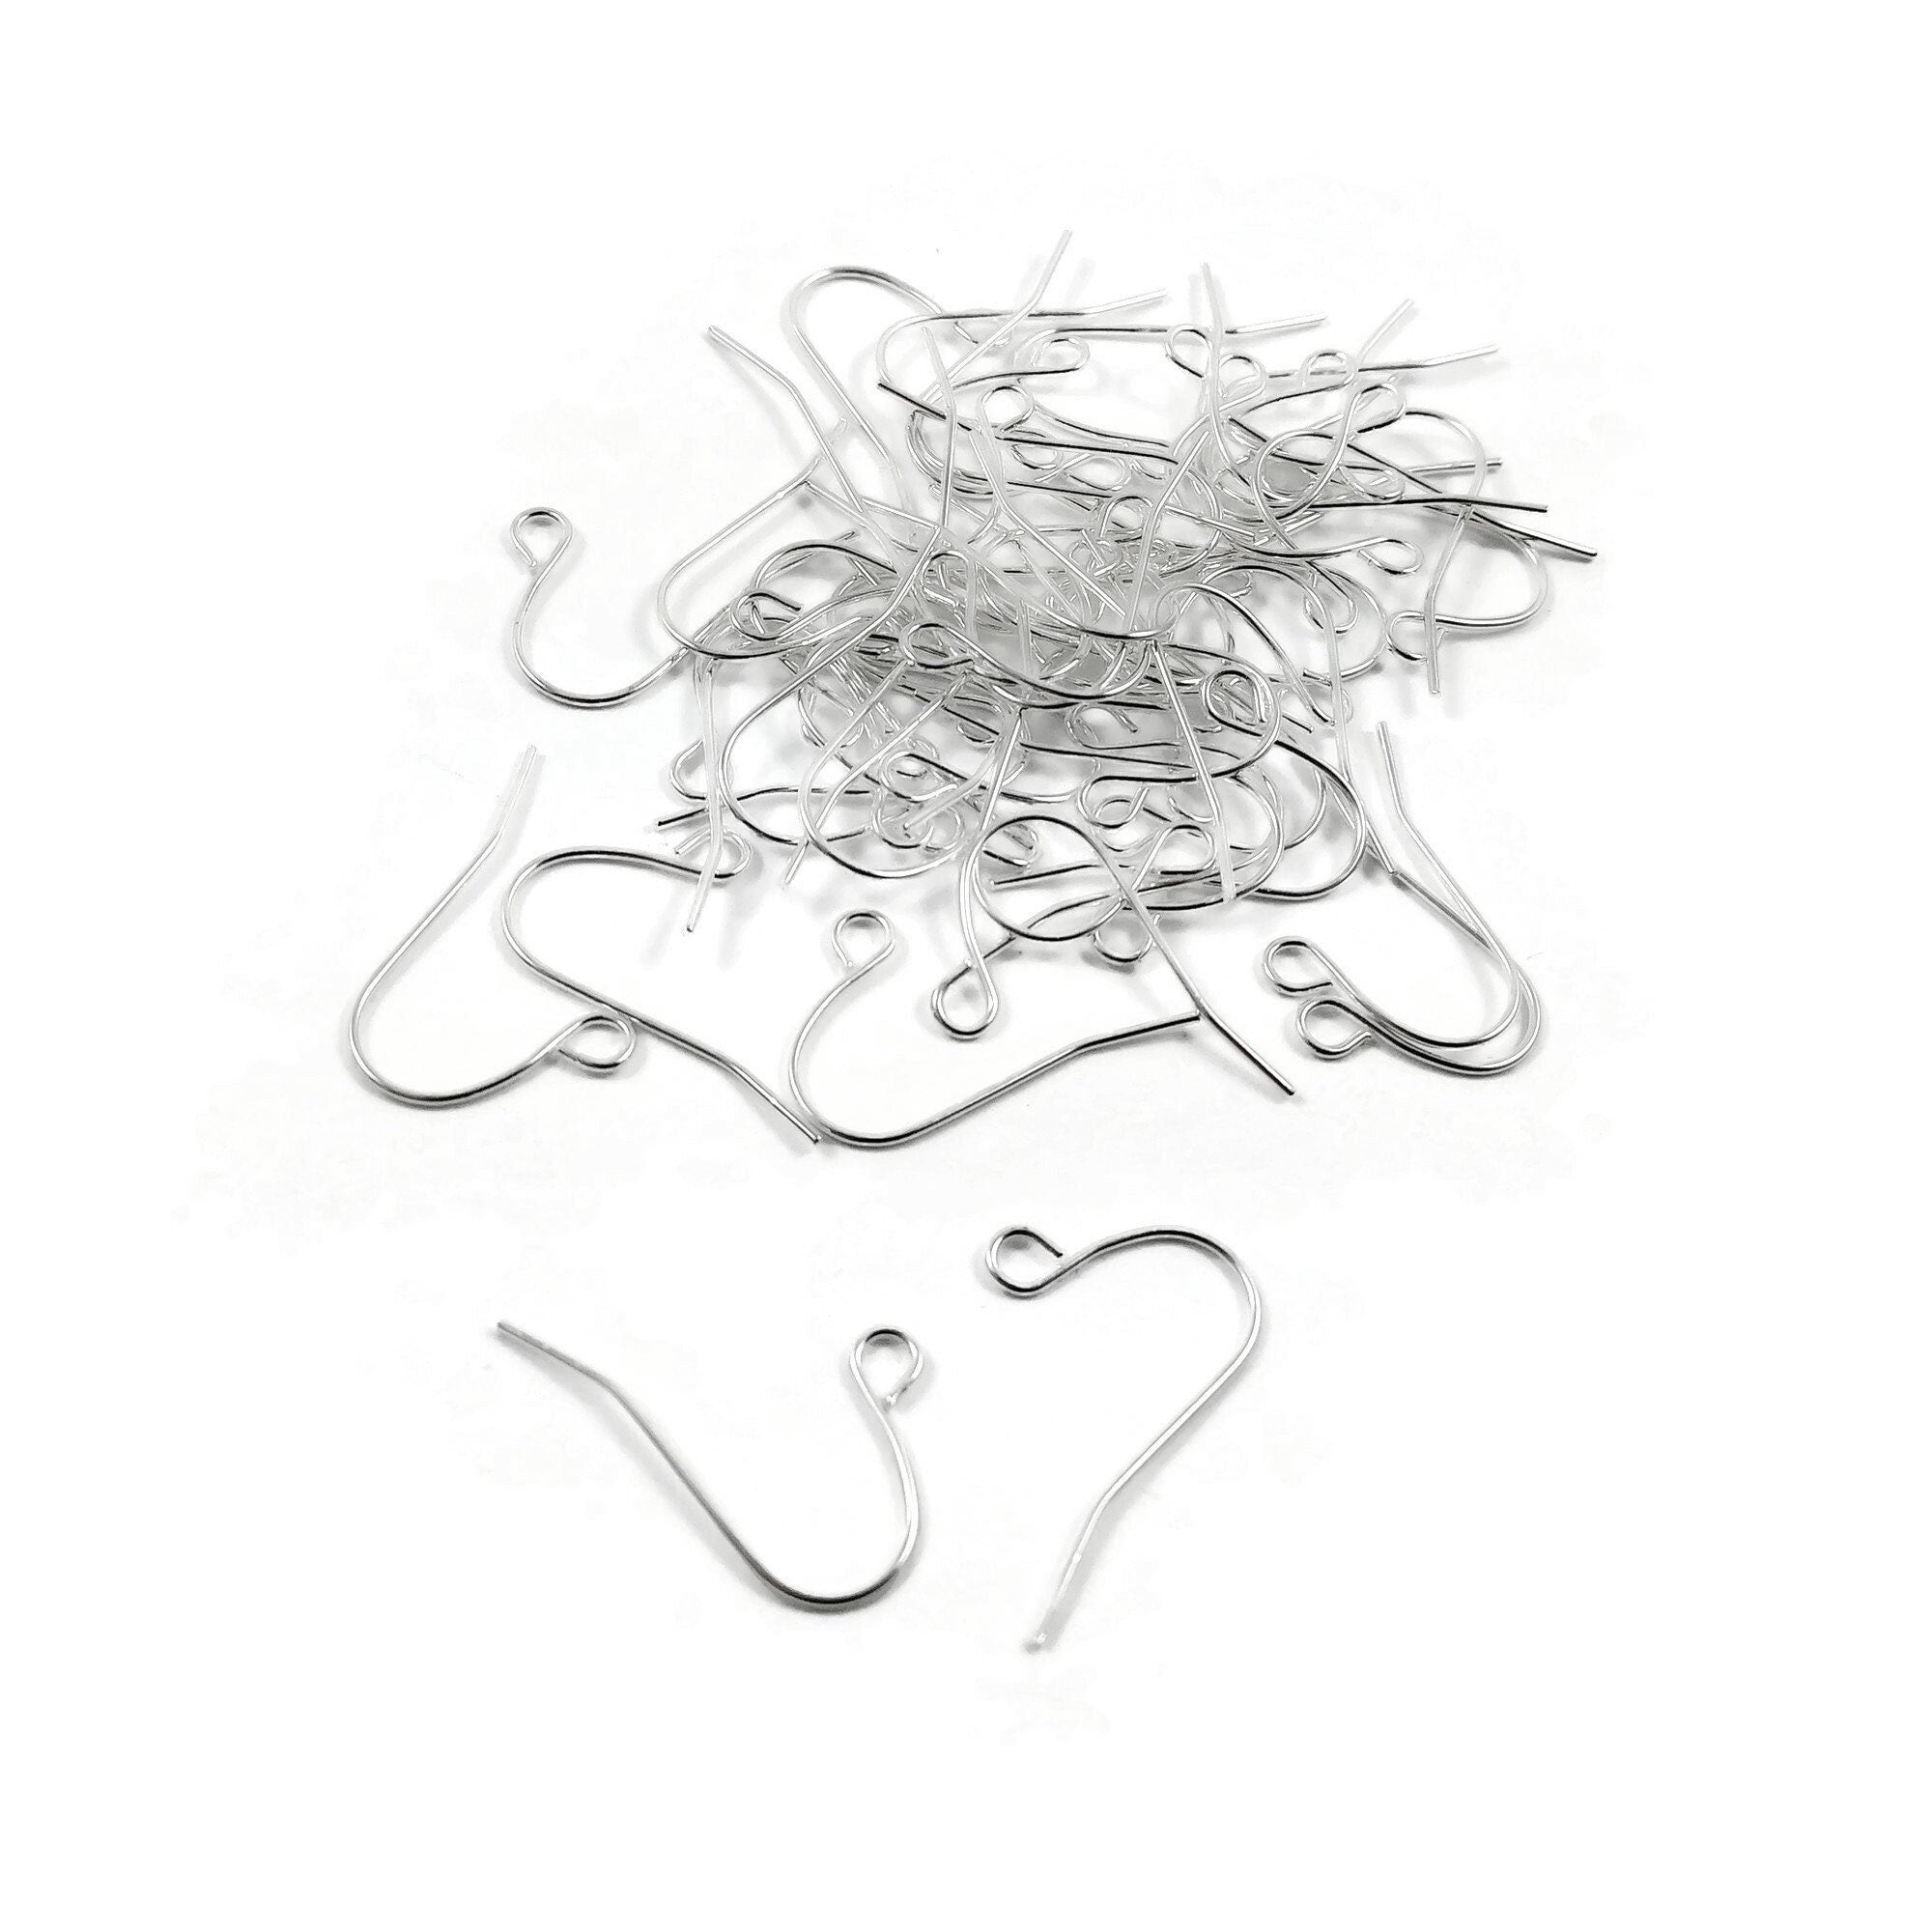 Hypoallergenic nickel free earring hooks, Silver plated iron ear wire, Earring findings for jewelry making